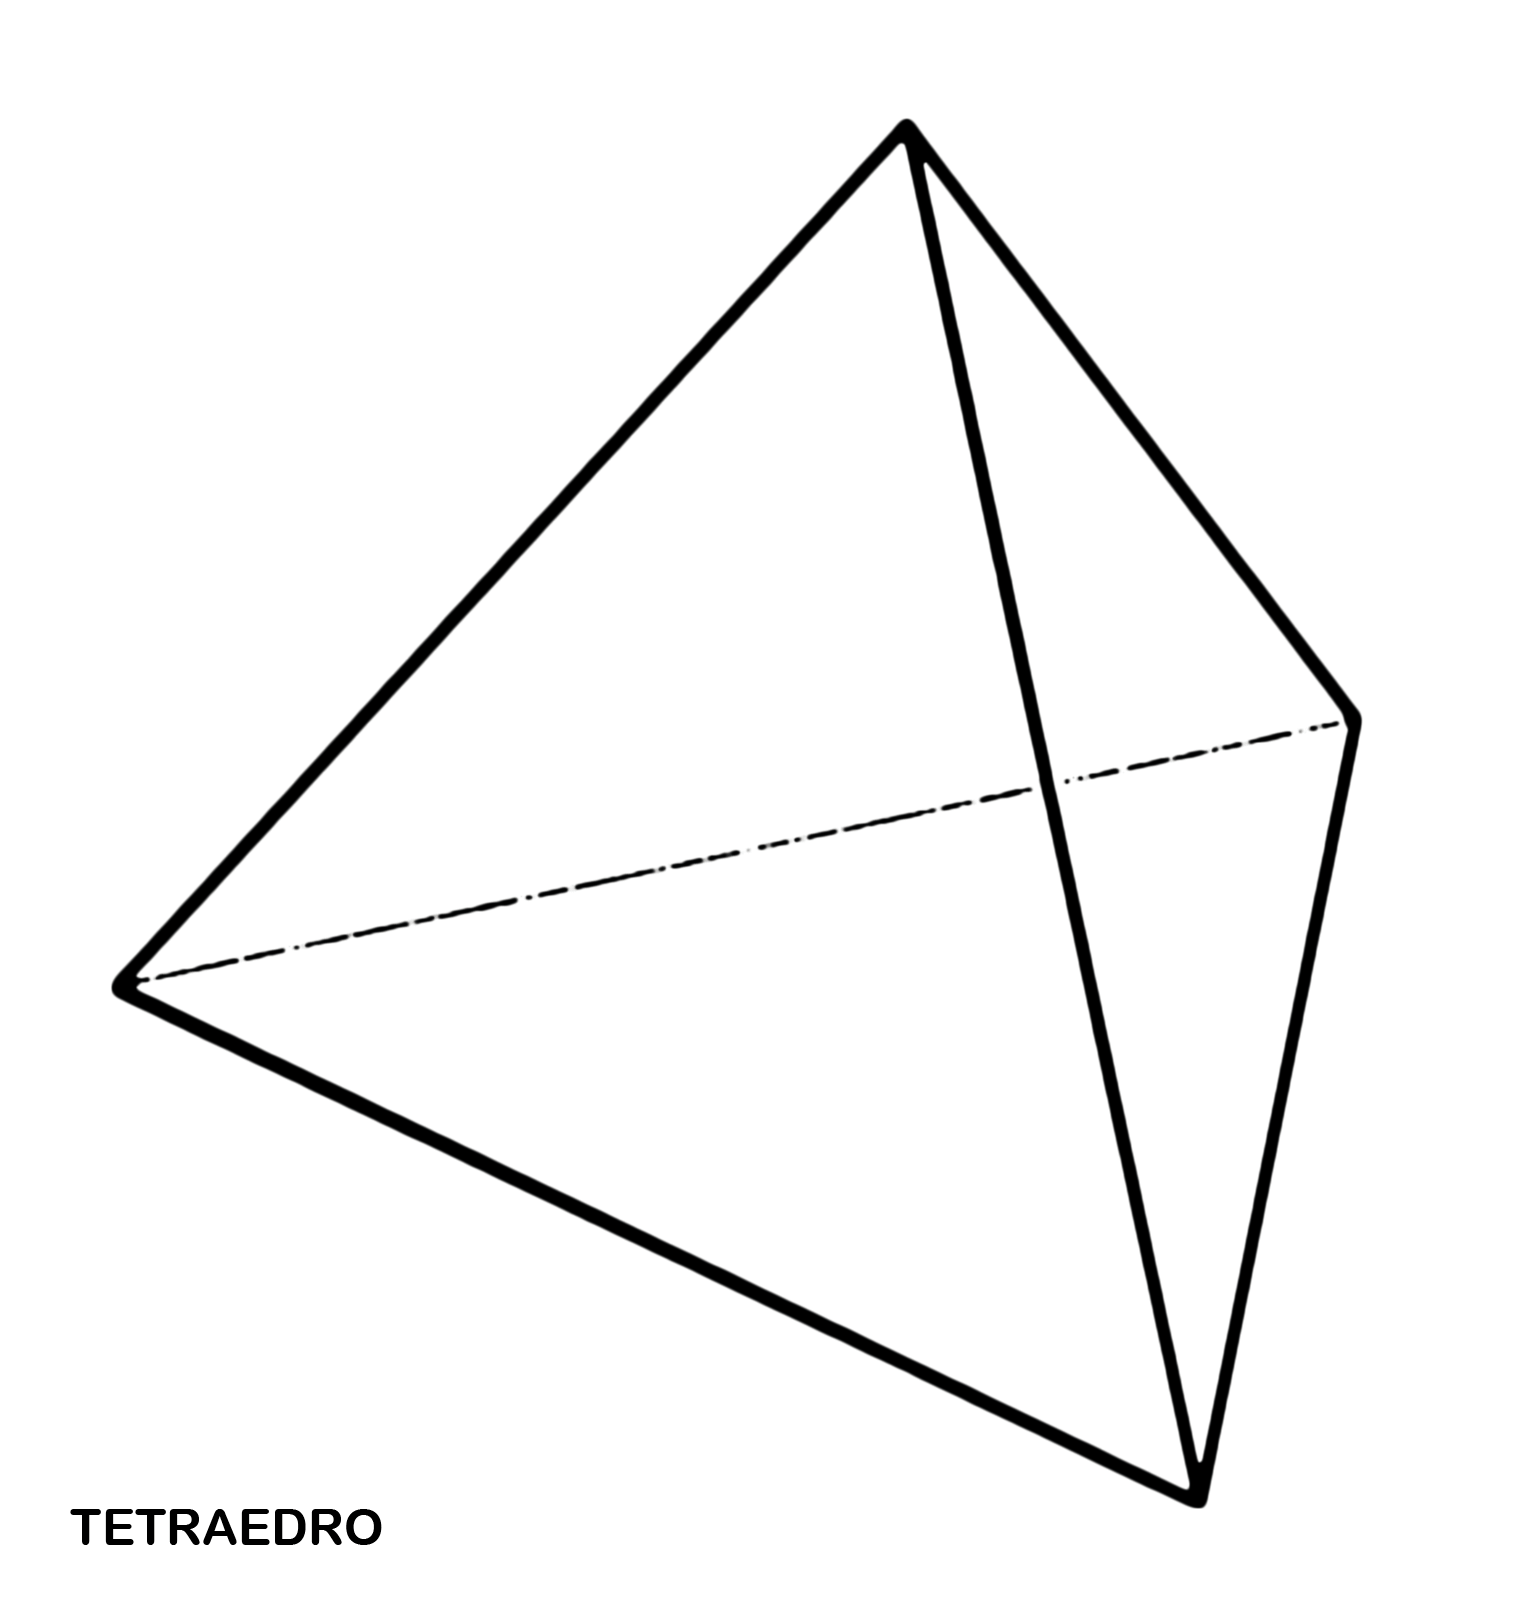 Figure geometriche - Figura geometrica solida - Tetraedro